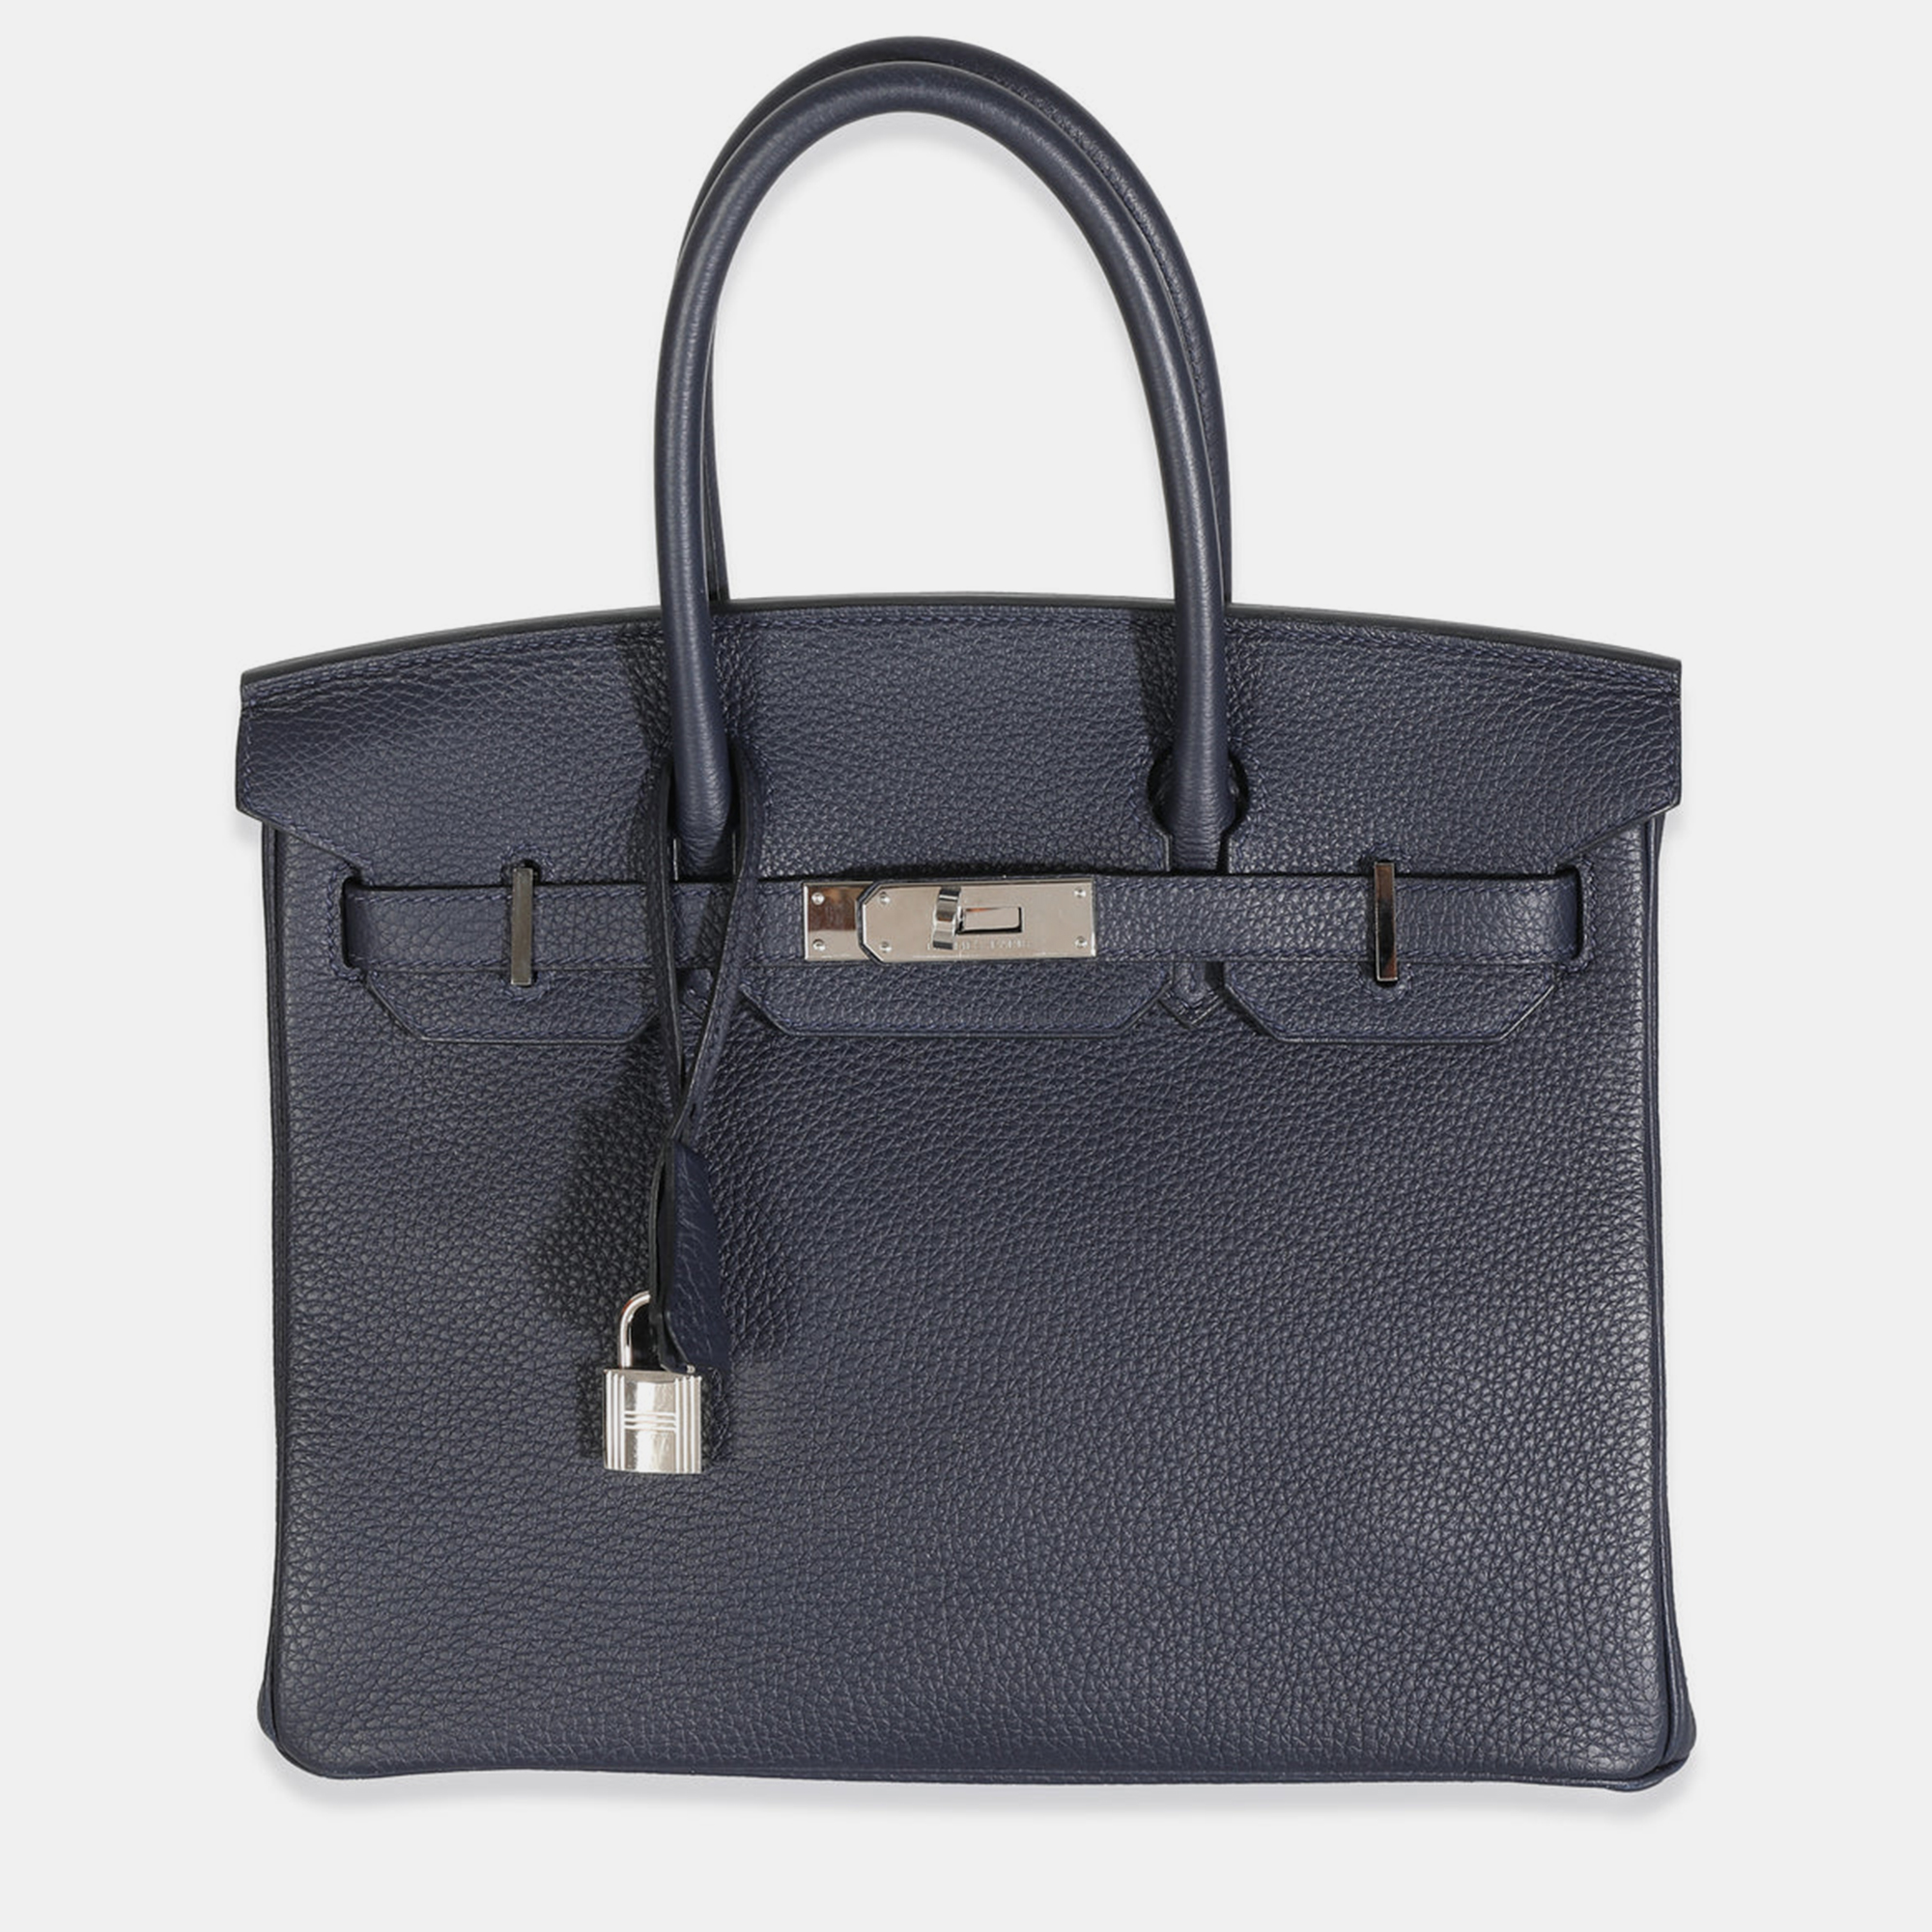 Hermes bleu nuit togo birkin 30 phw handbag